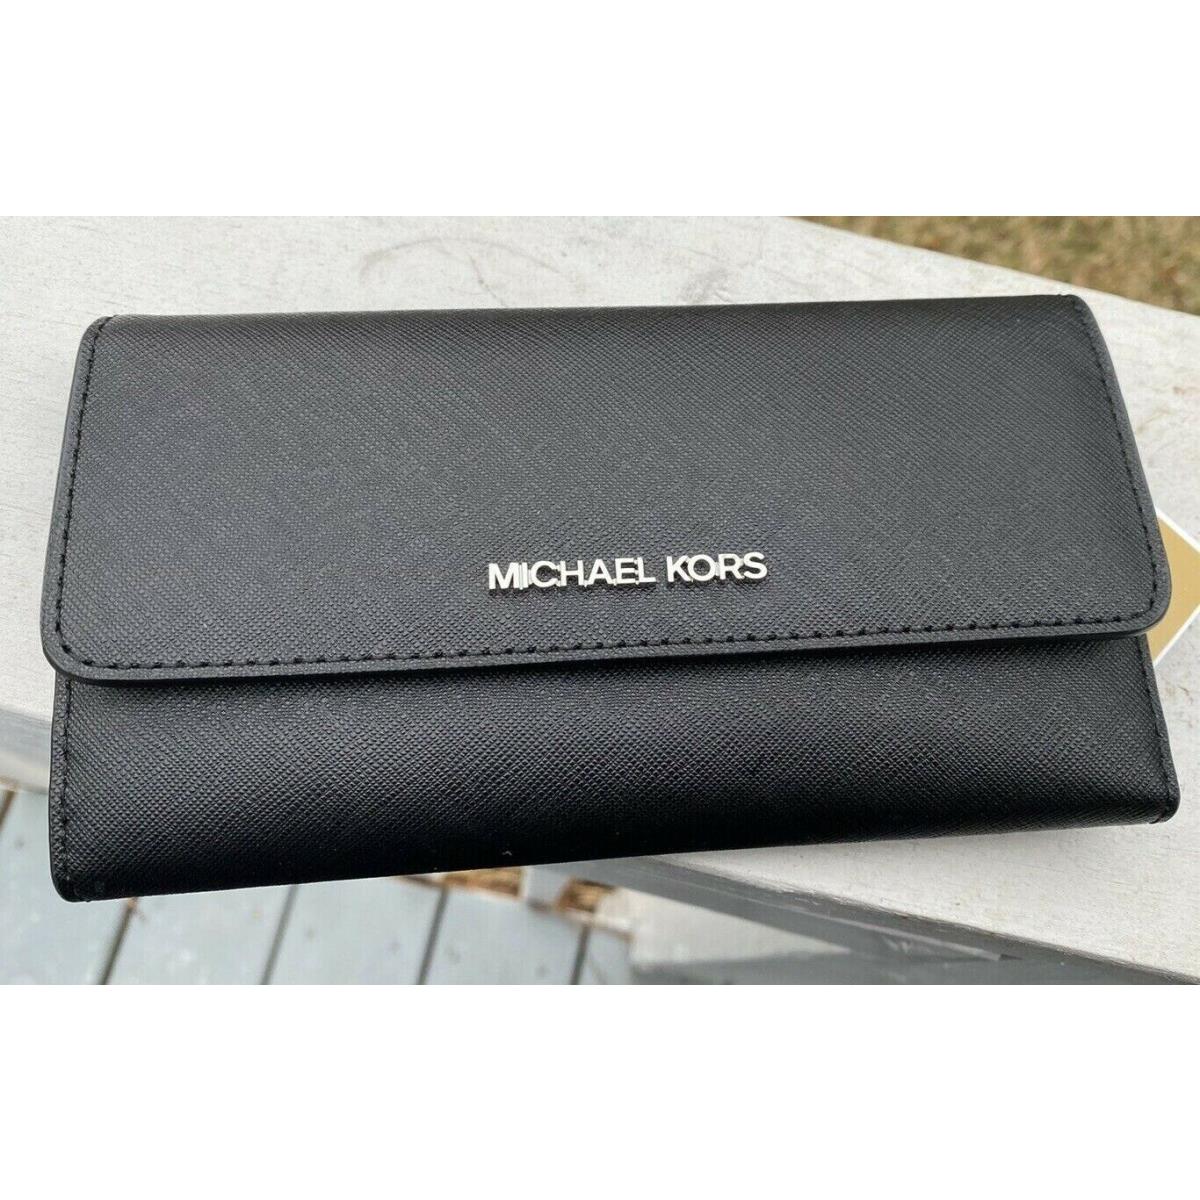 Michael Kors Jet Set Travel Large Trifold Leather Wallet Black / Silver